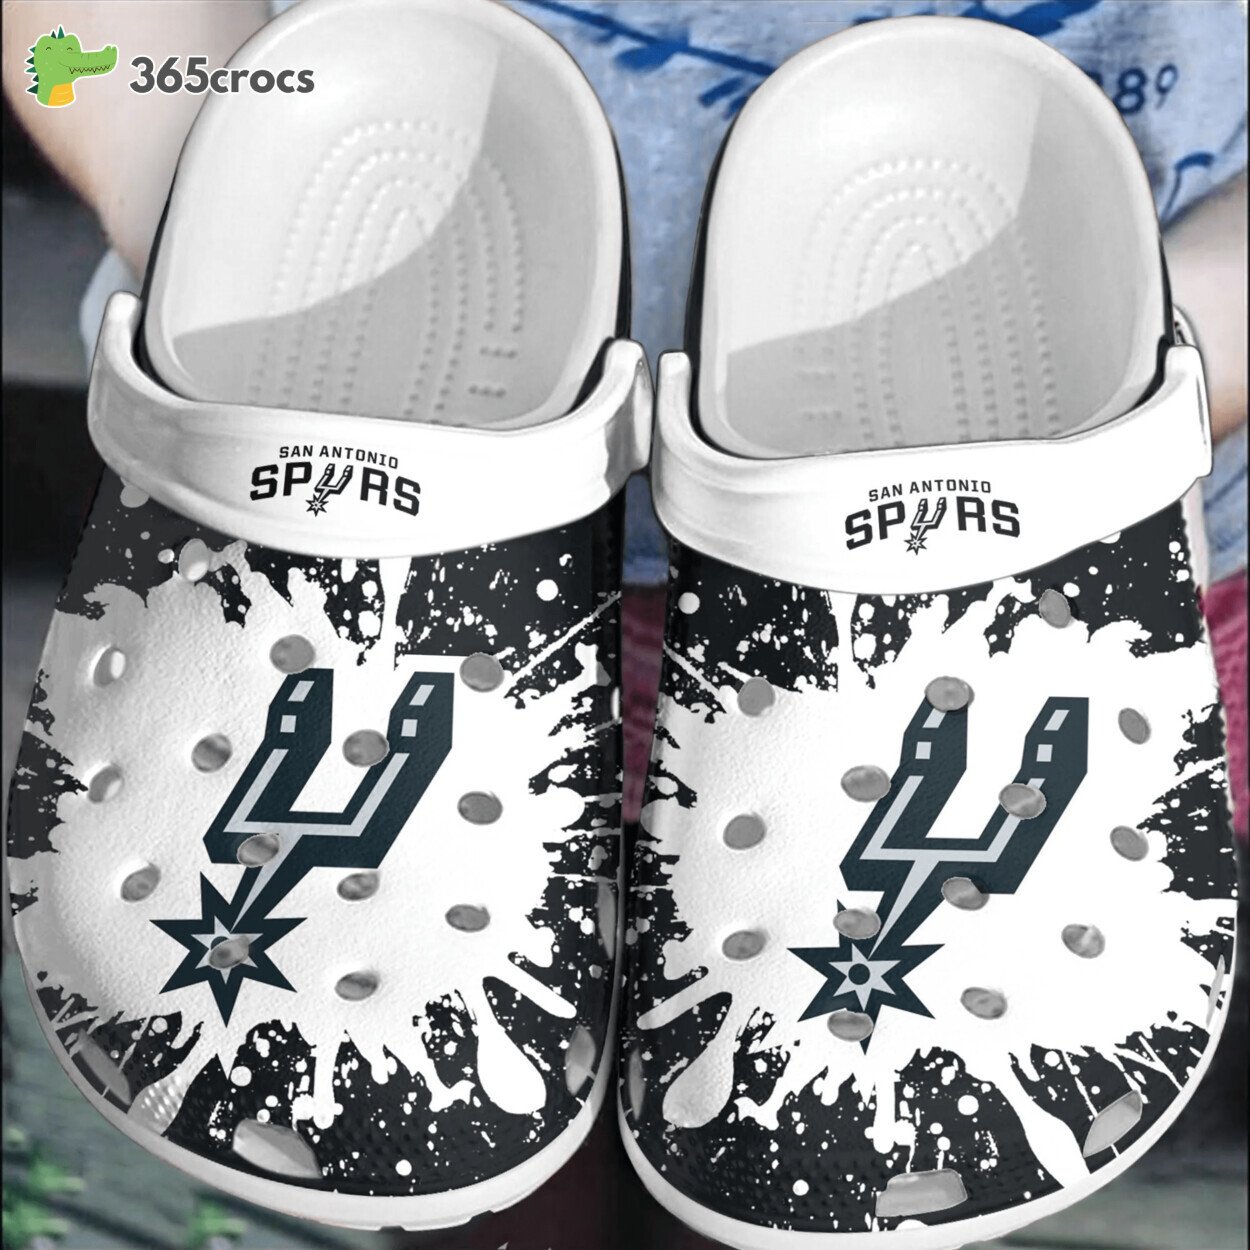 San Antonio Spurs Basketball Comfortable Crocss Shoes Clogs